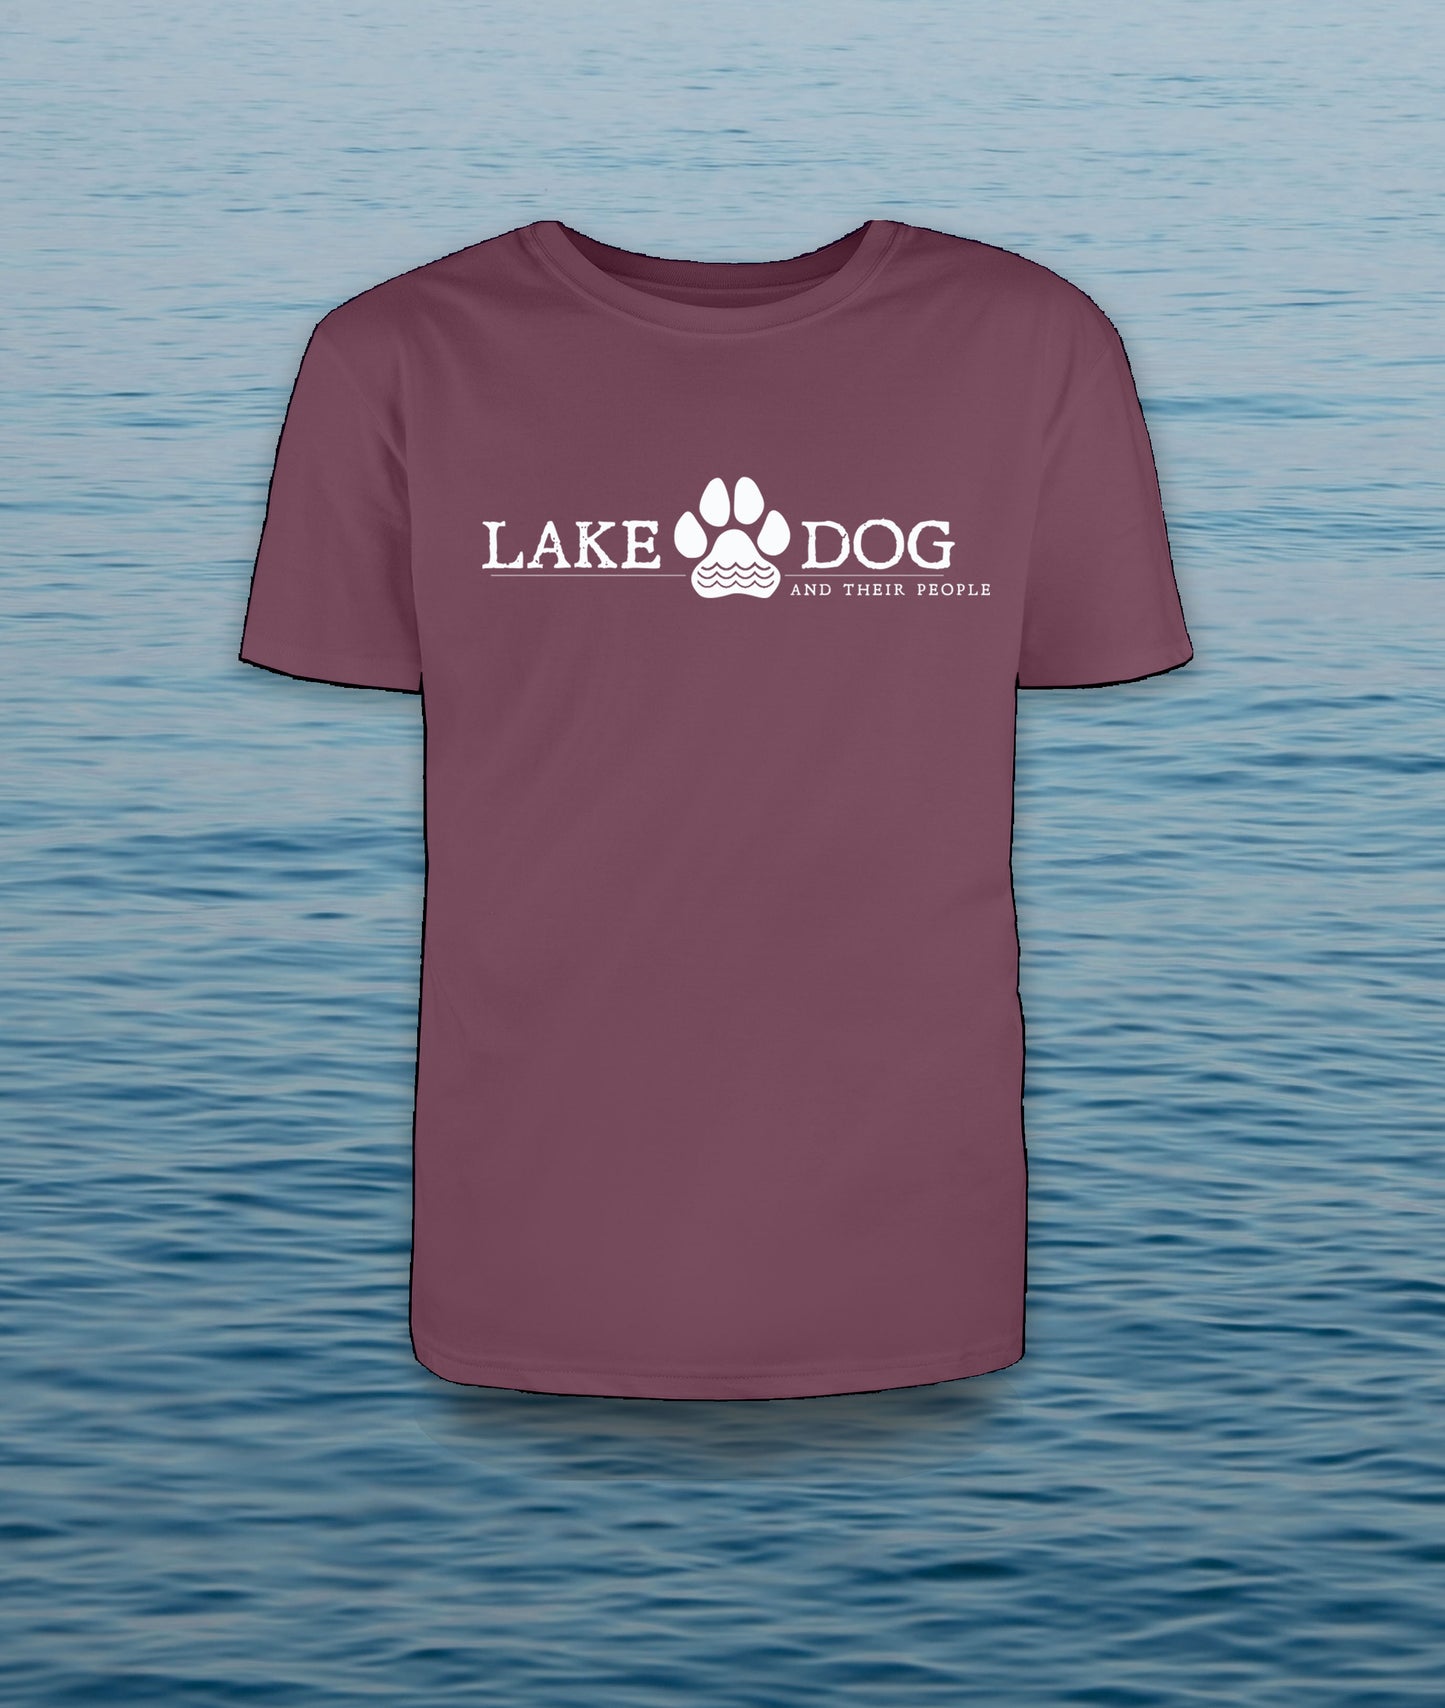 Classic Lake Dog - Lake Dog and their people